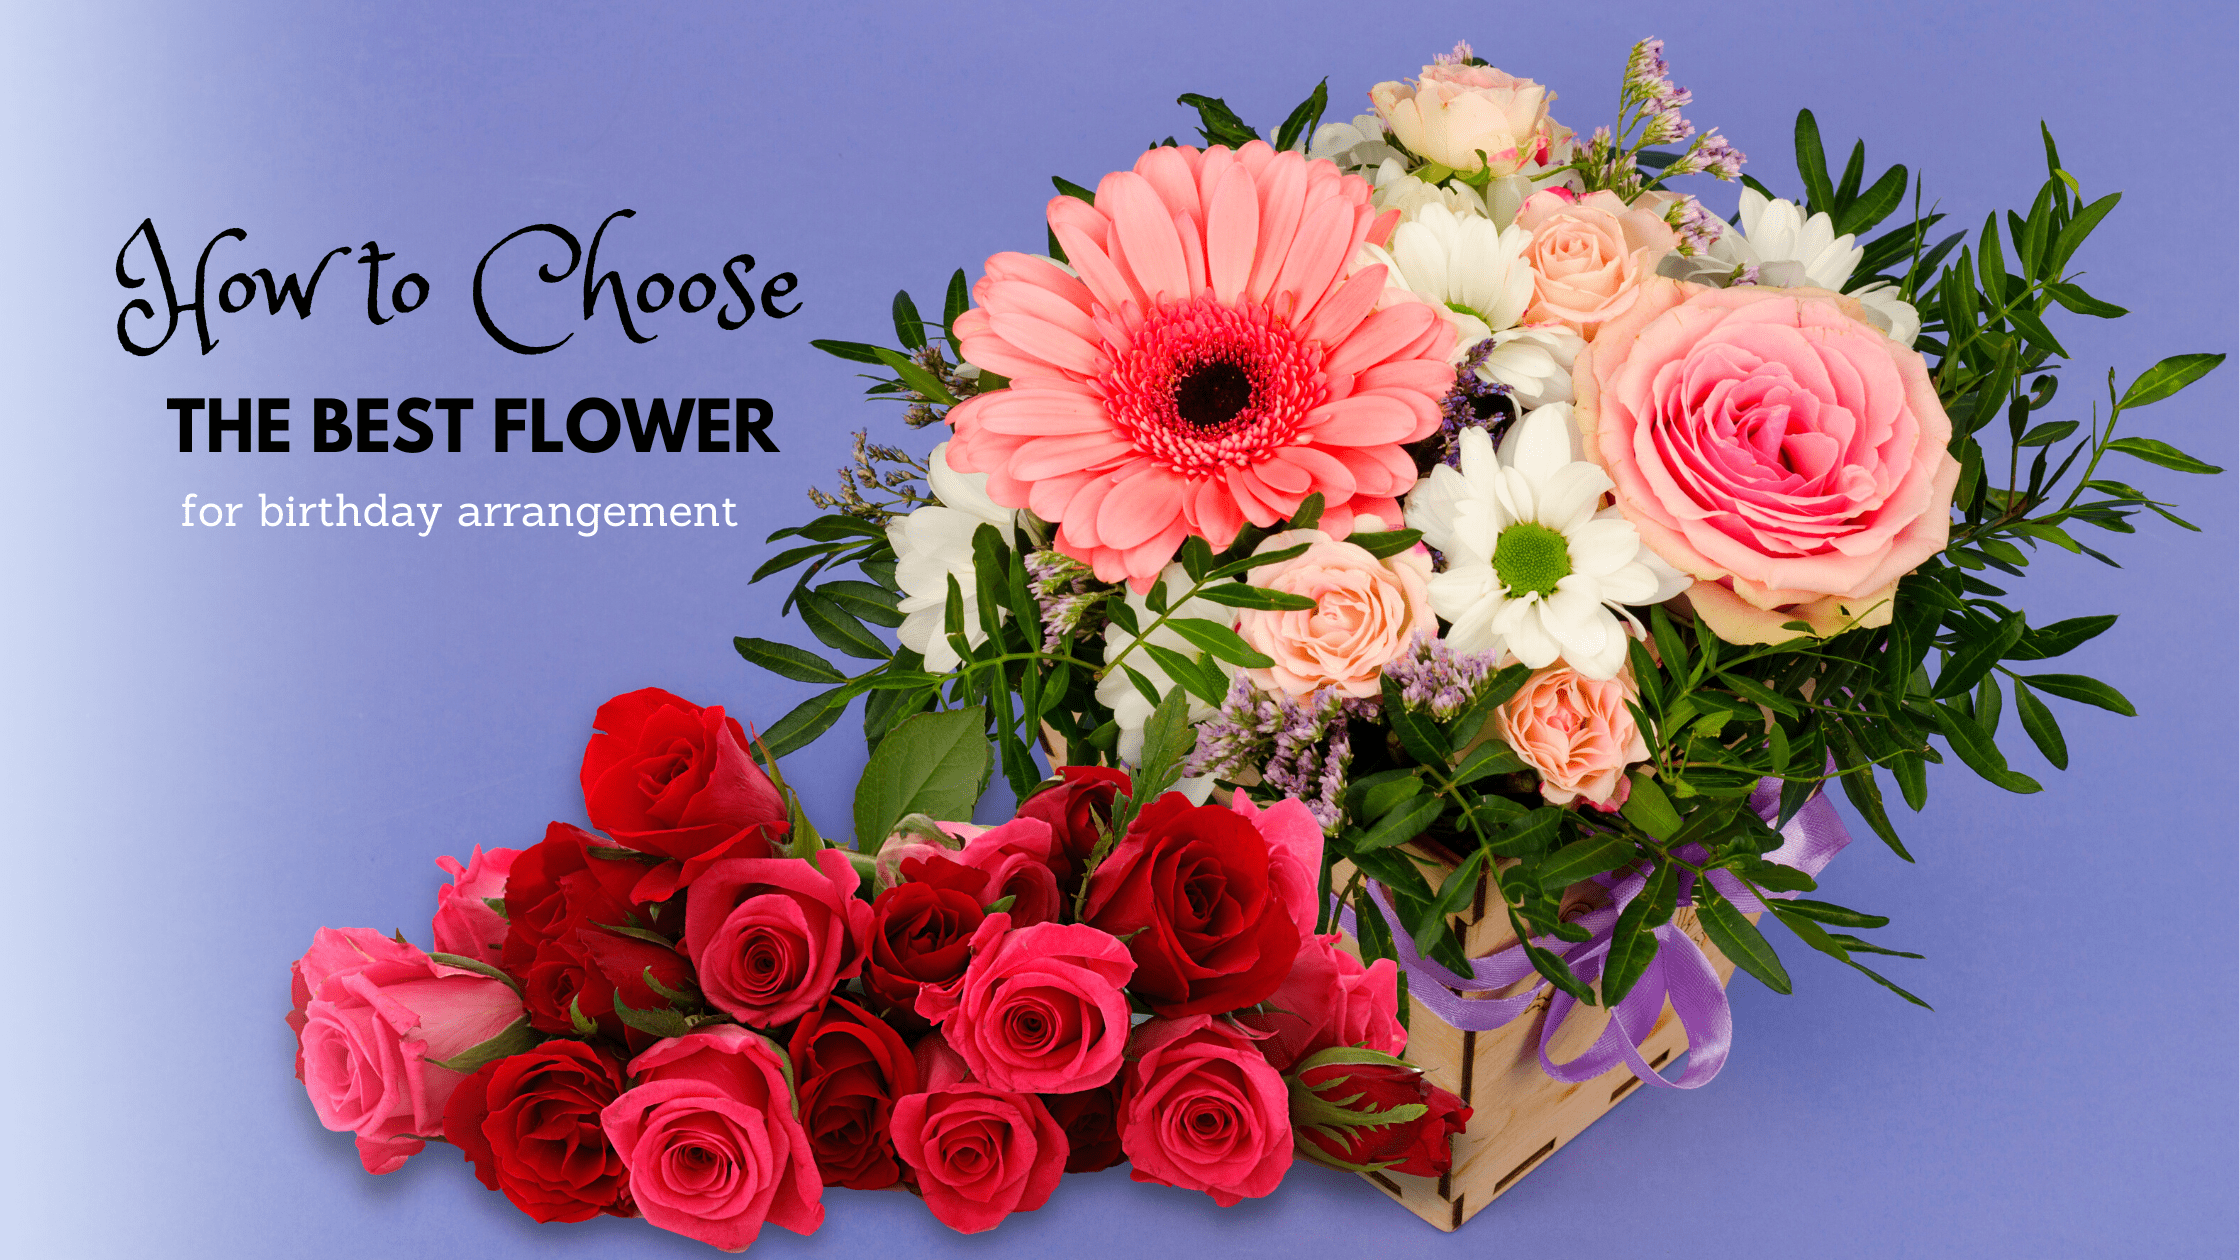 Best Flower for Birthday, KL florist for you flowers need.